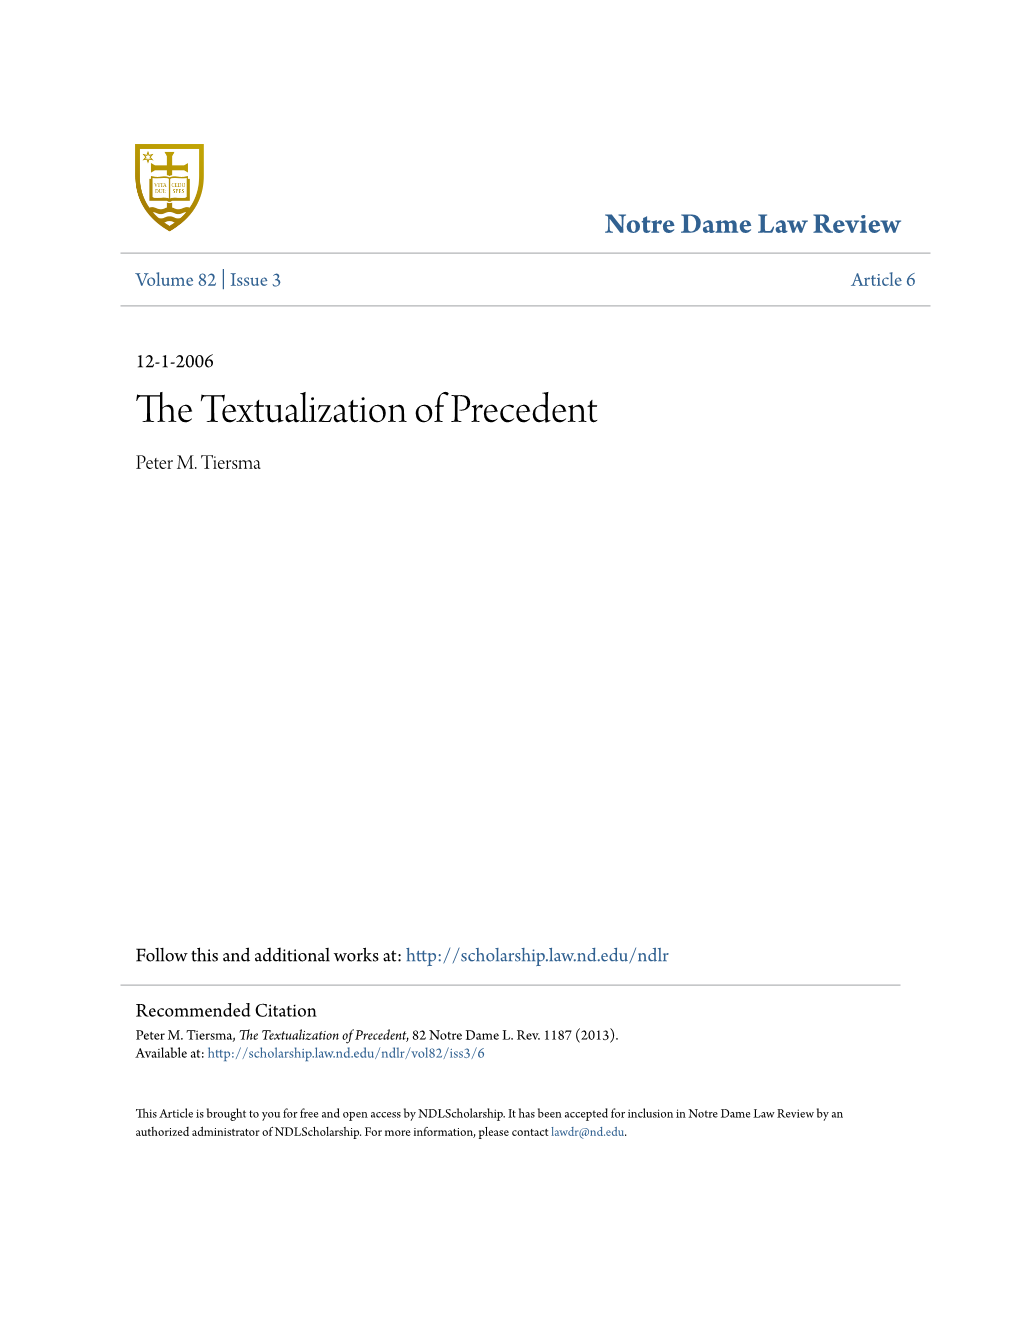 The Textualization of Precedent, 82 Notre Dame L